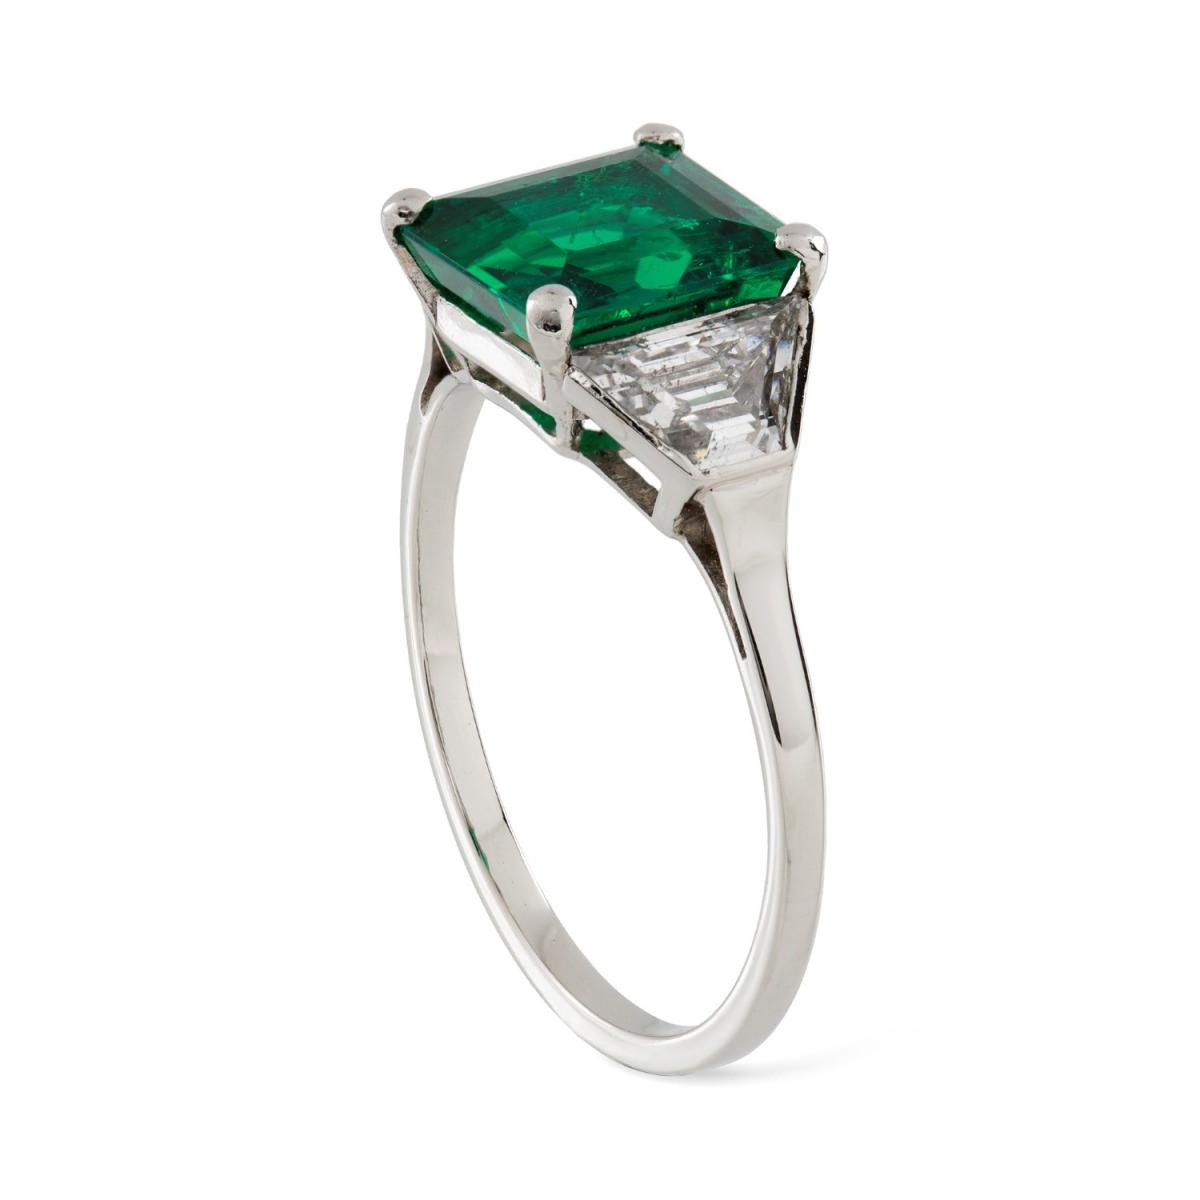 A Vintage Emerald and Diamond Ring, Colombian Origin, Circa 1950